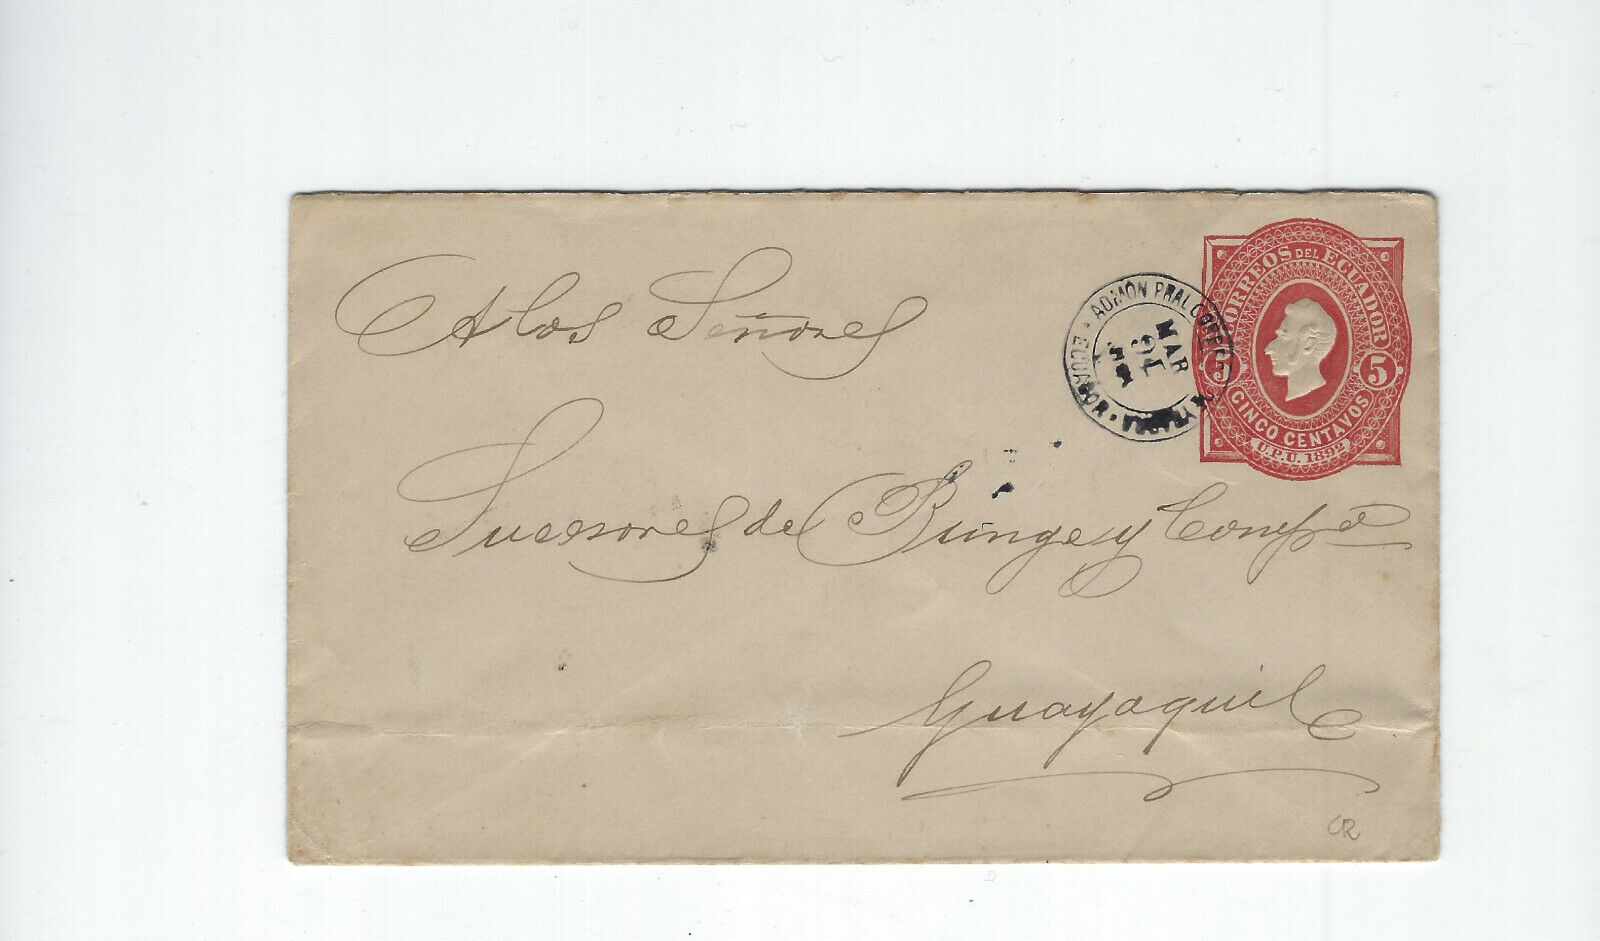 Ecuador-stationary-embossed-189?-envelope-5 Cent Red Rate-internal #33